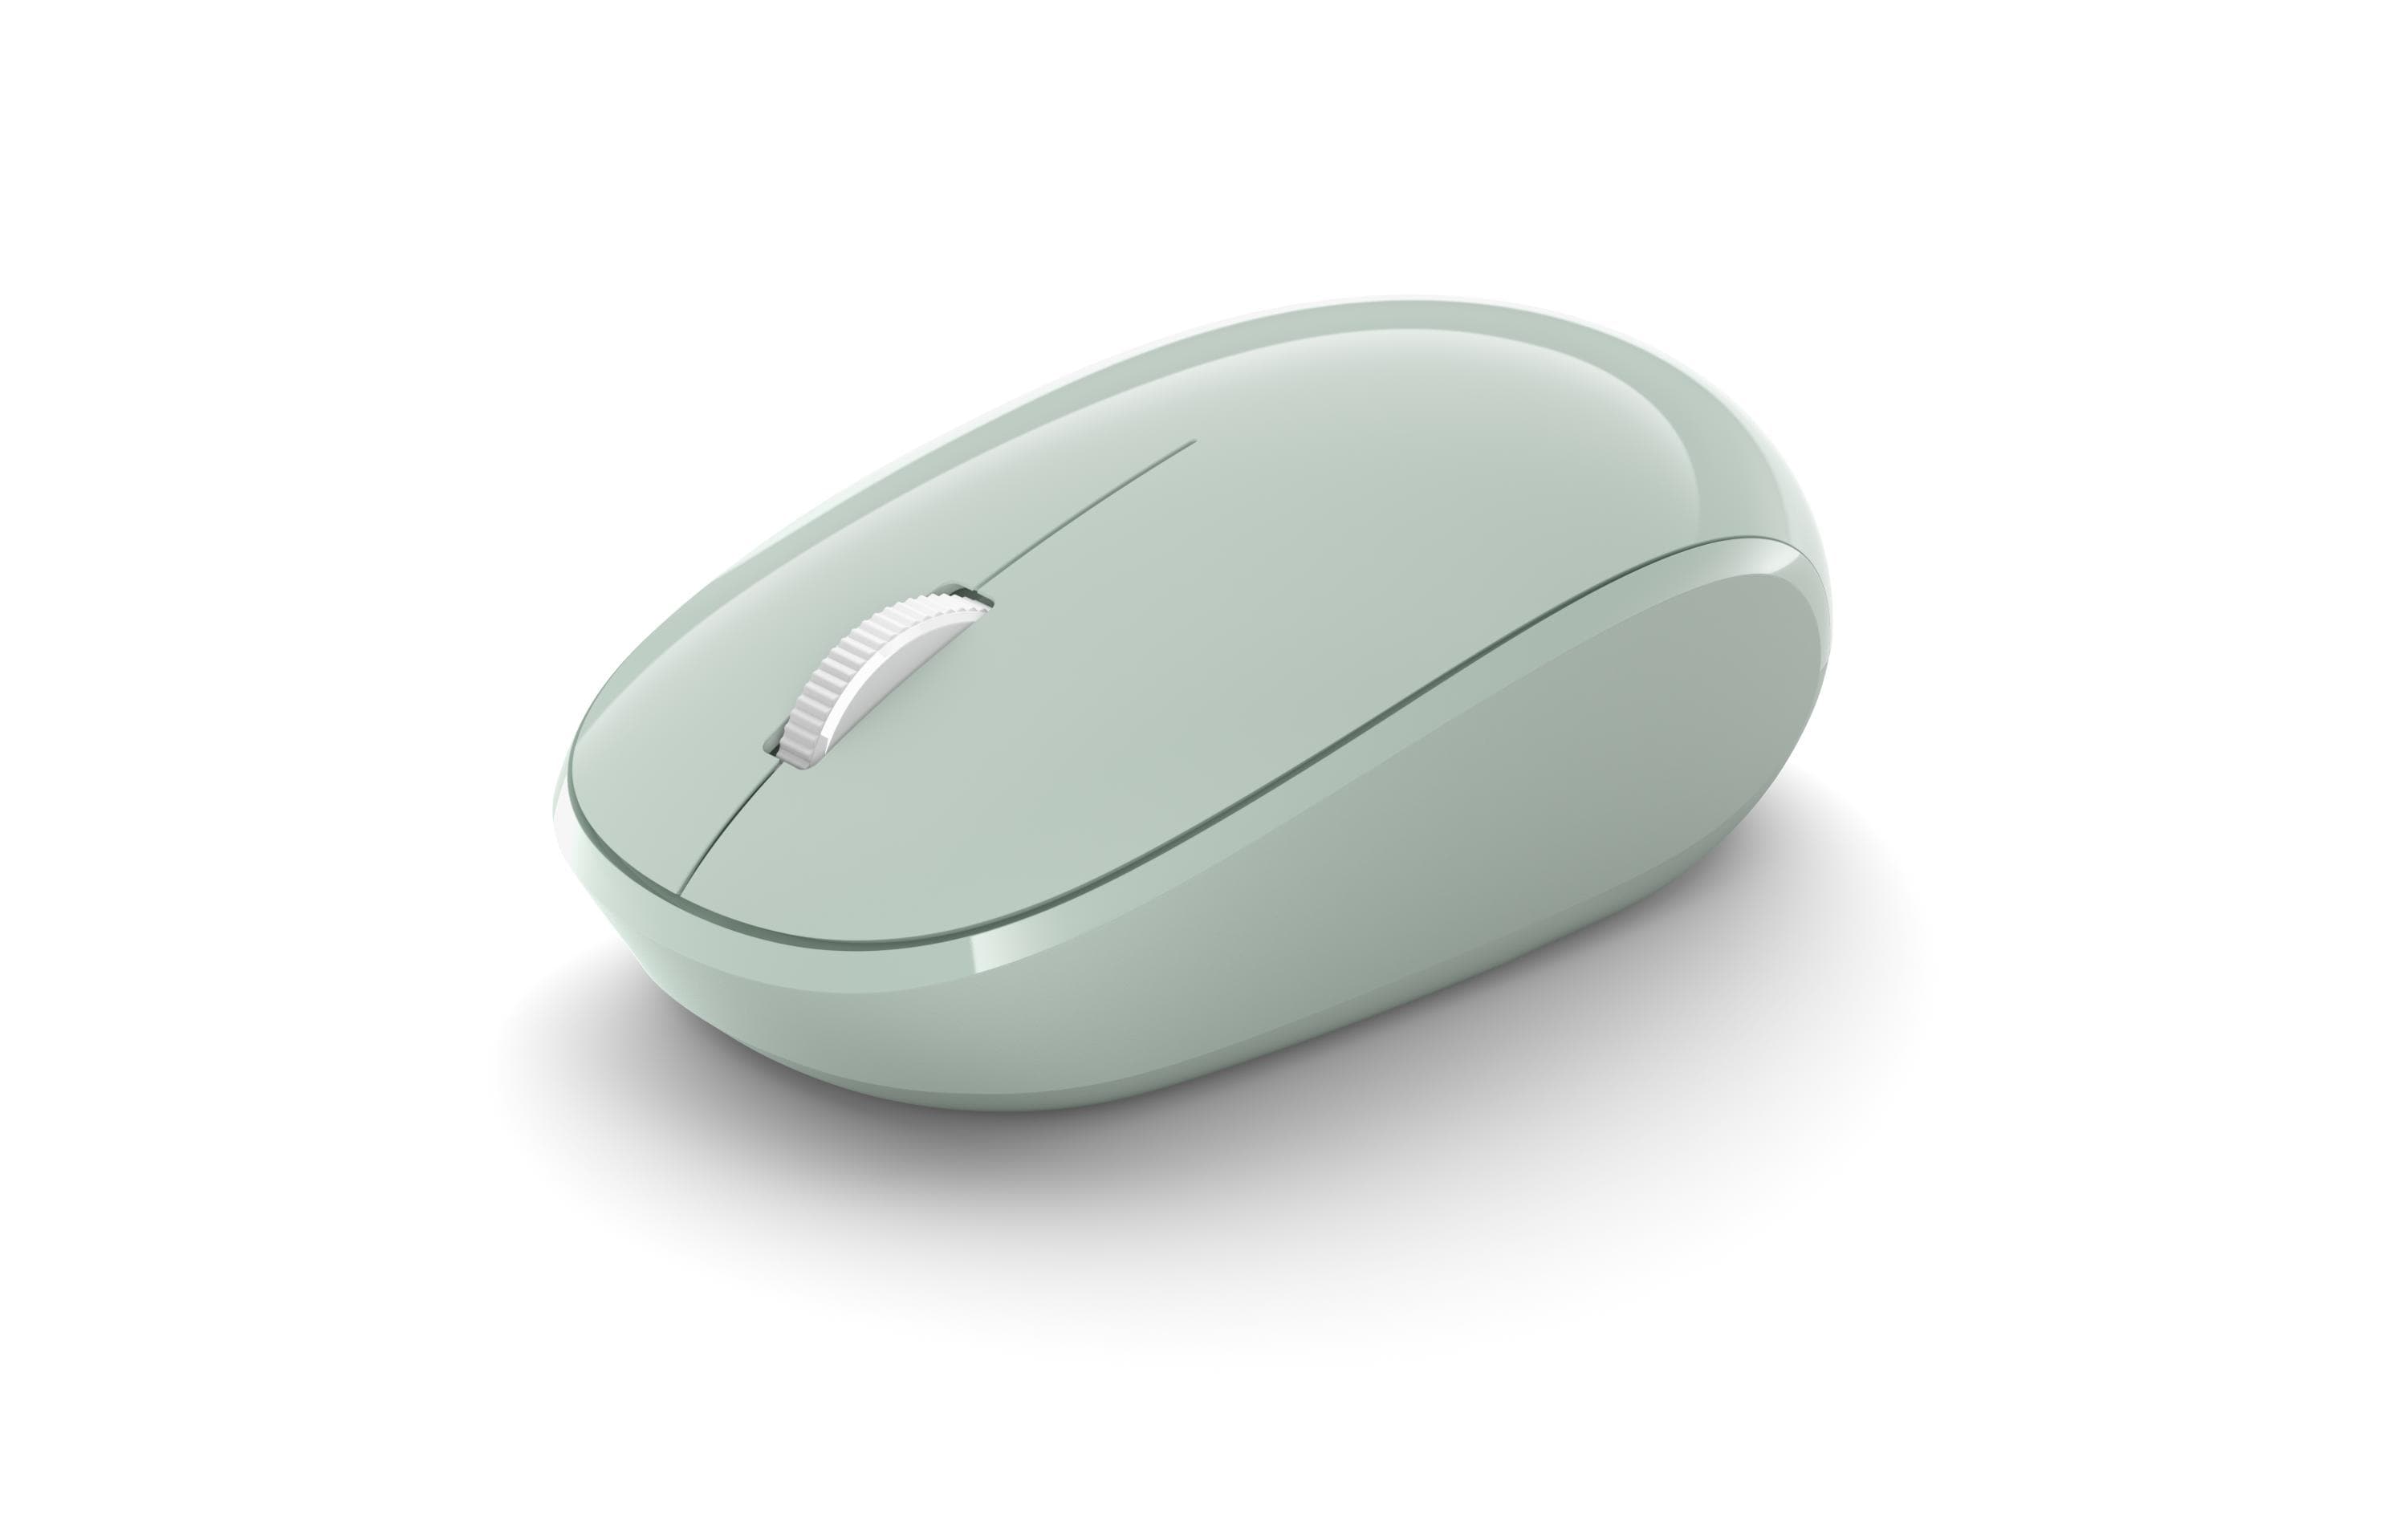 Microsoft Bluetooth Mouse Mint